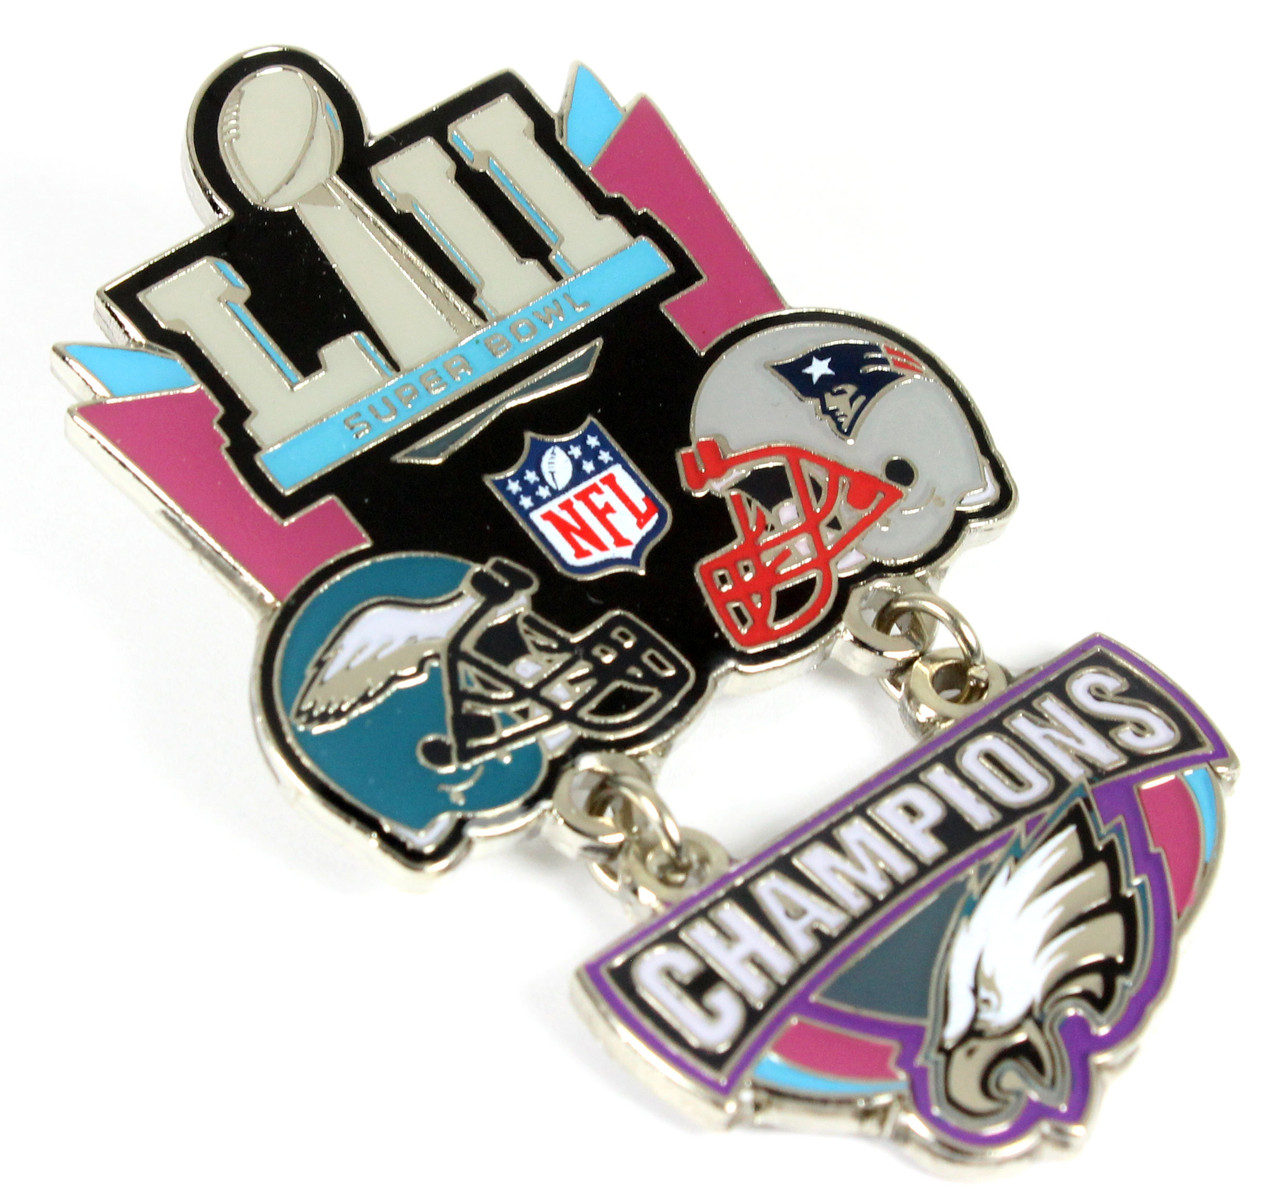 Super Bowl LVII (57) Oversized Commemorative Pin - Dangler Style